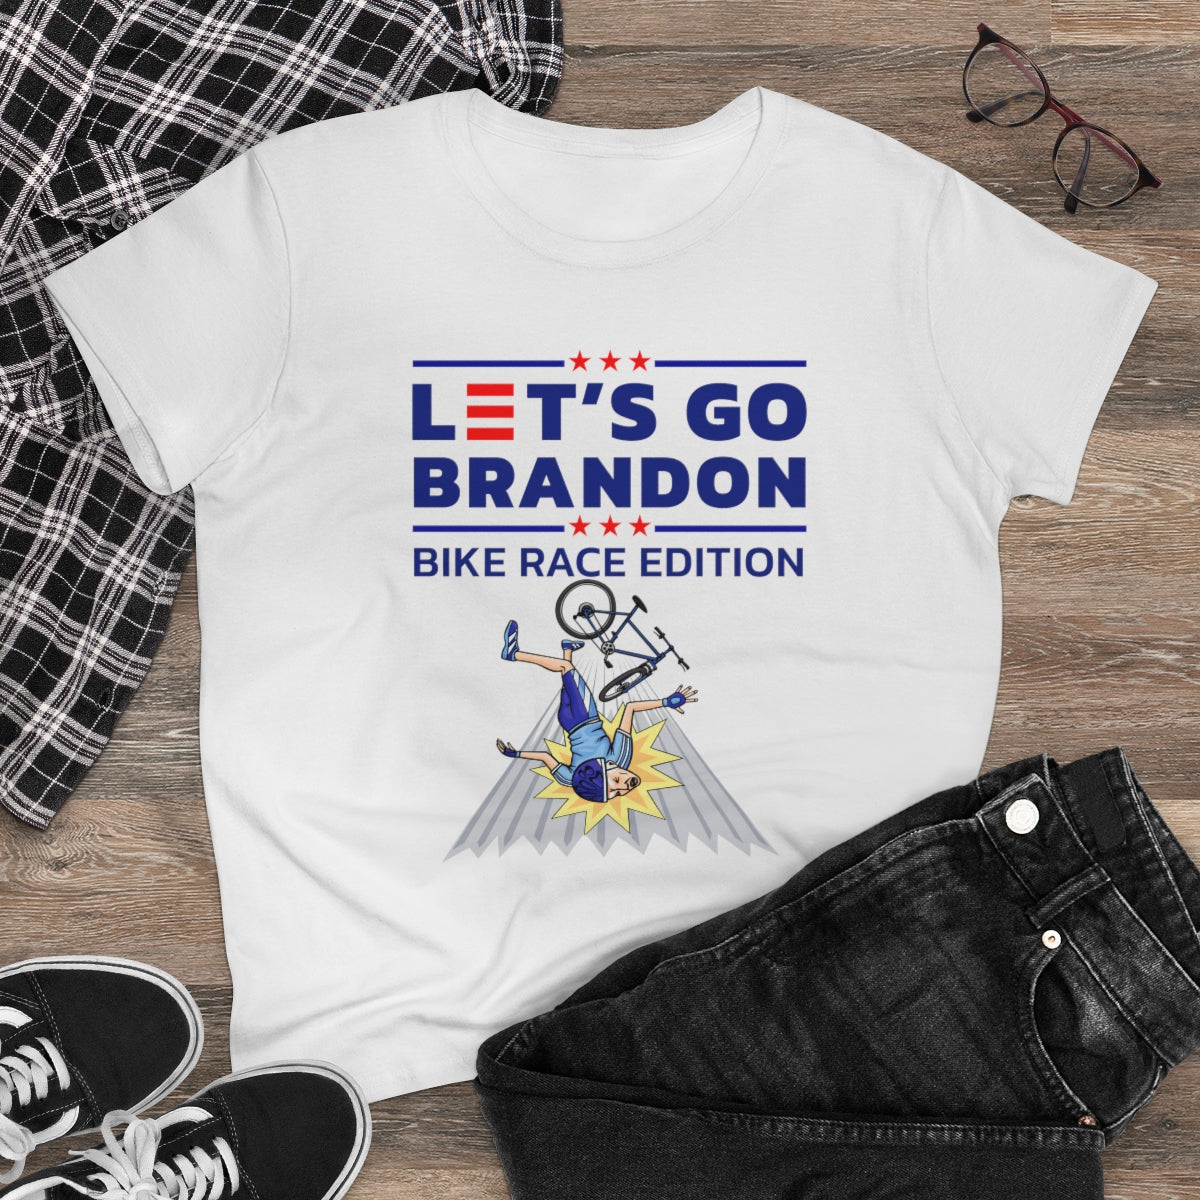 Let's Go Brandon Bike Race Edition | Women's Tee - Rise of The New Media